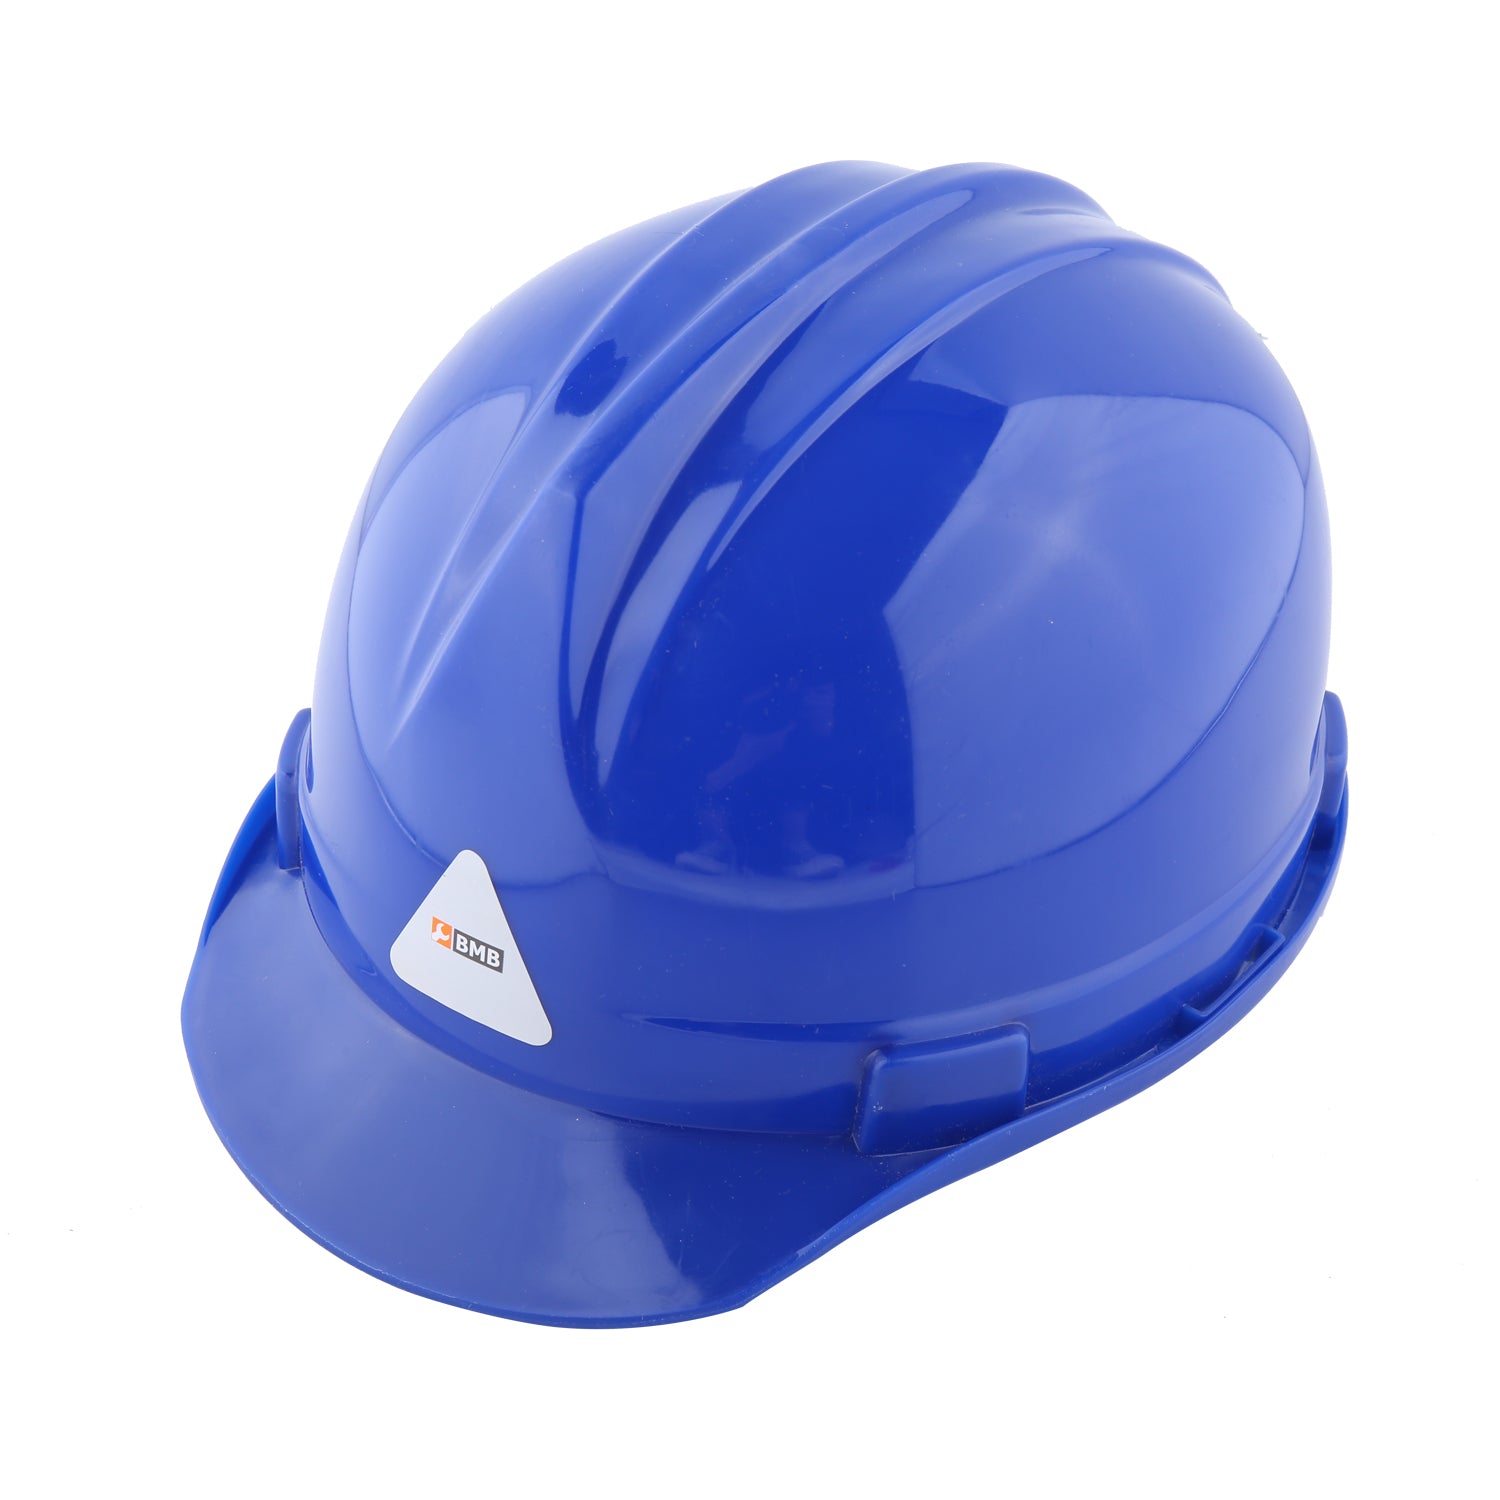 Deluxe Safety Helmet - Blue